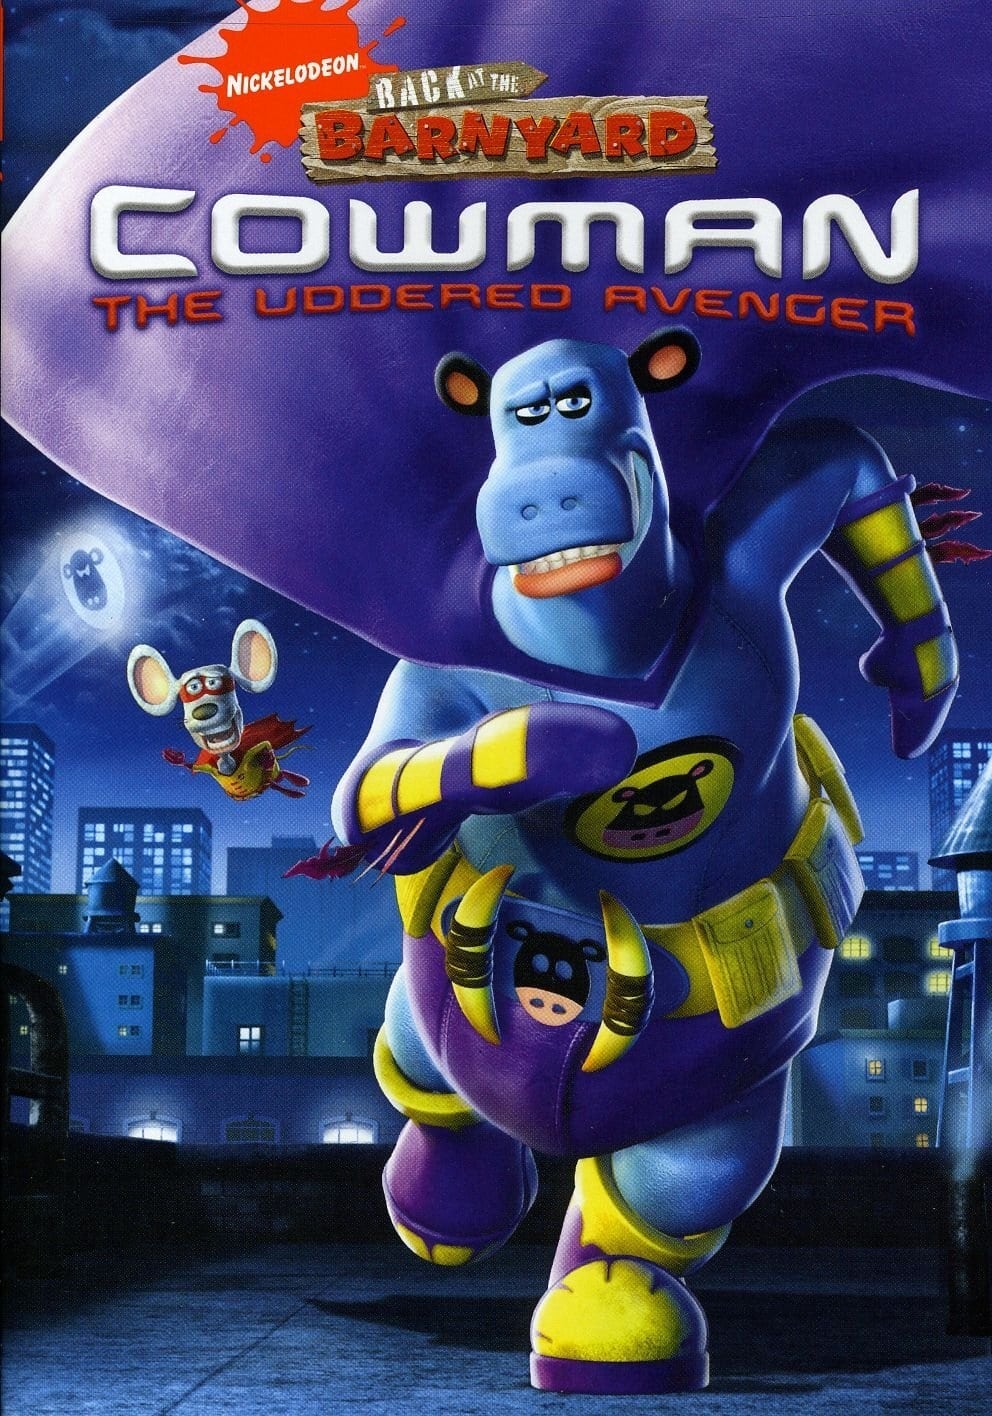 Cowman: The Uddered Avenger